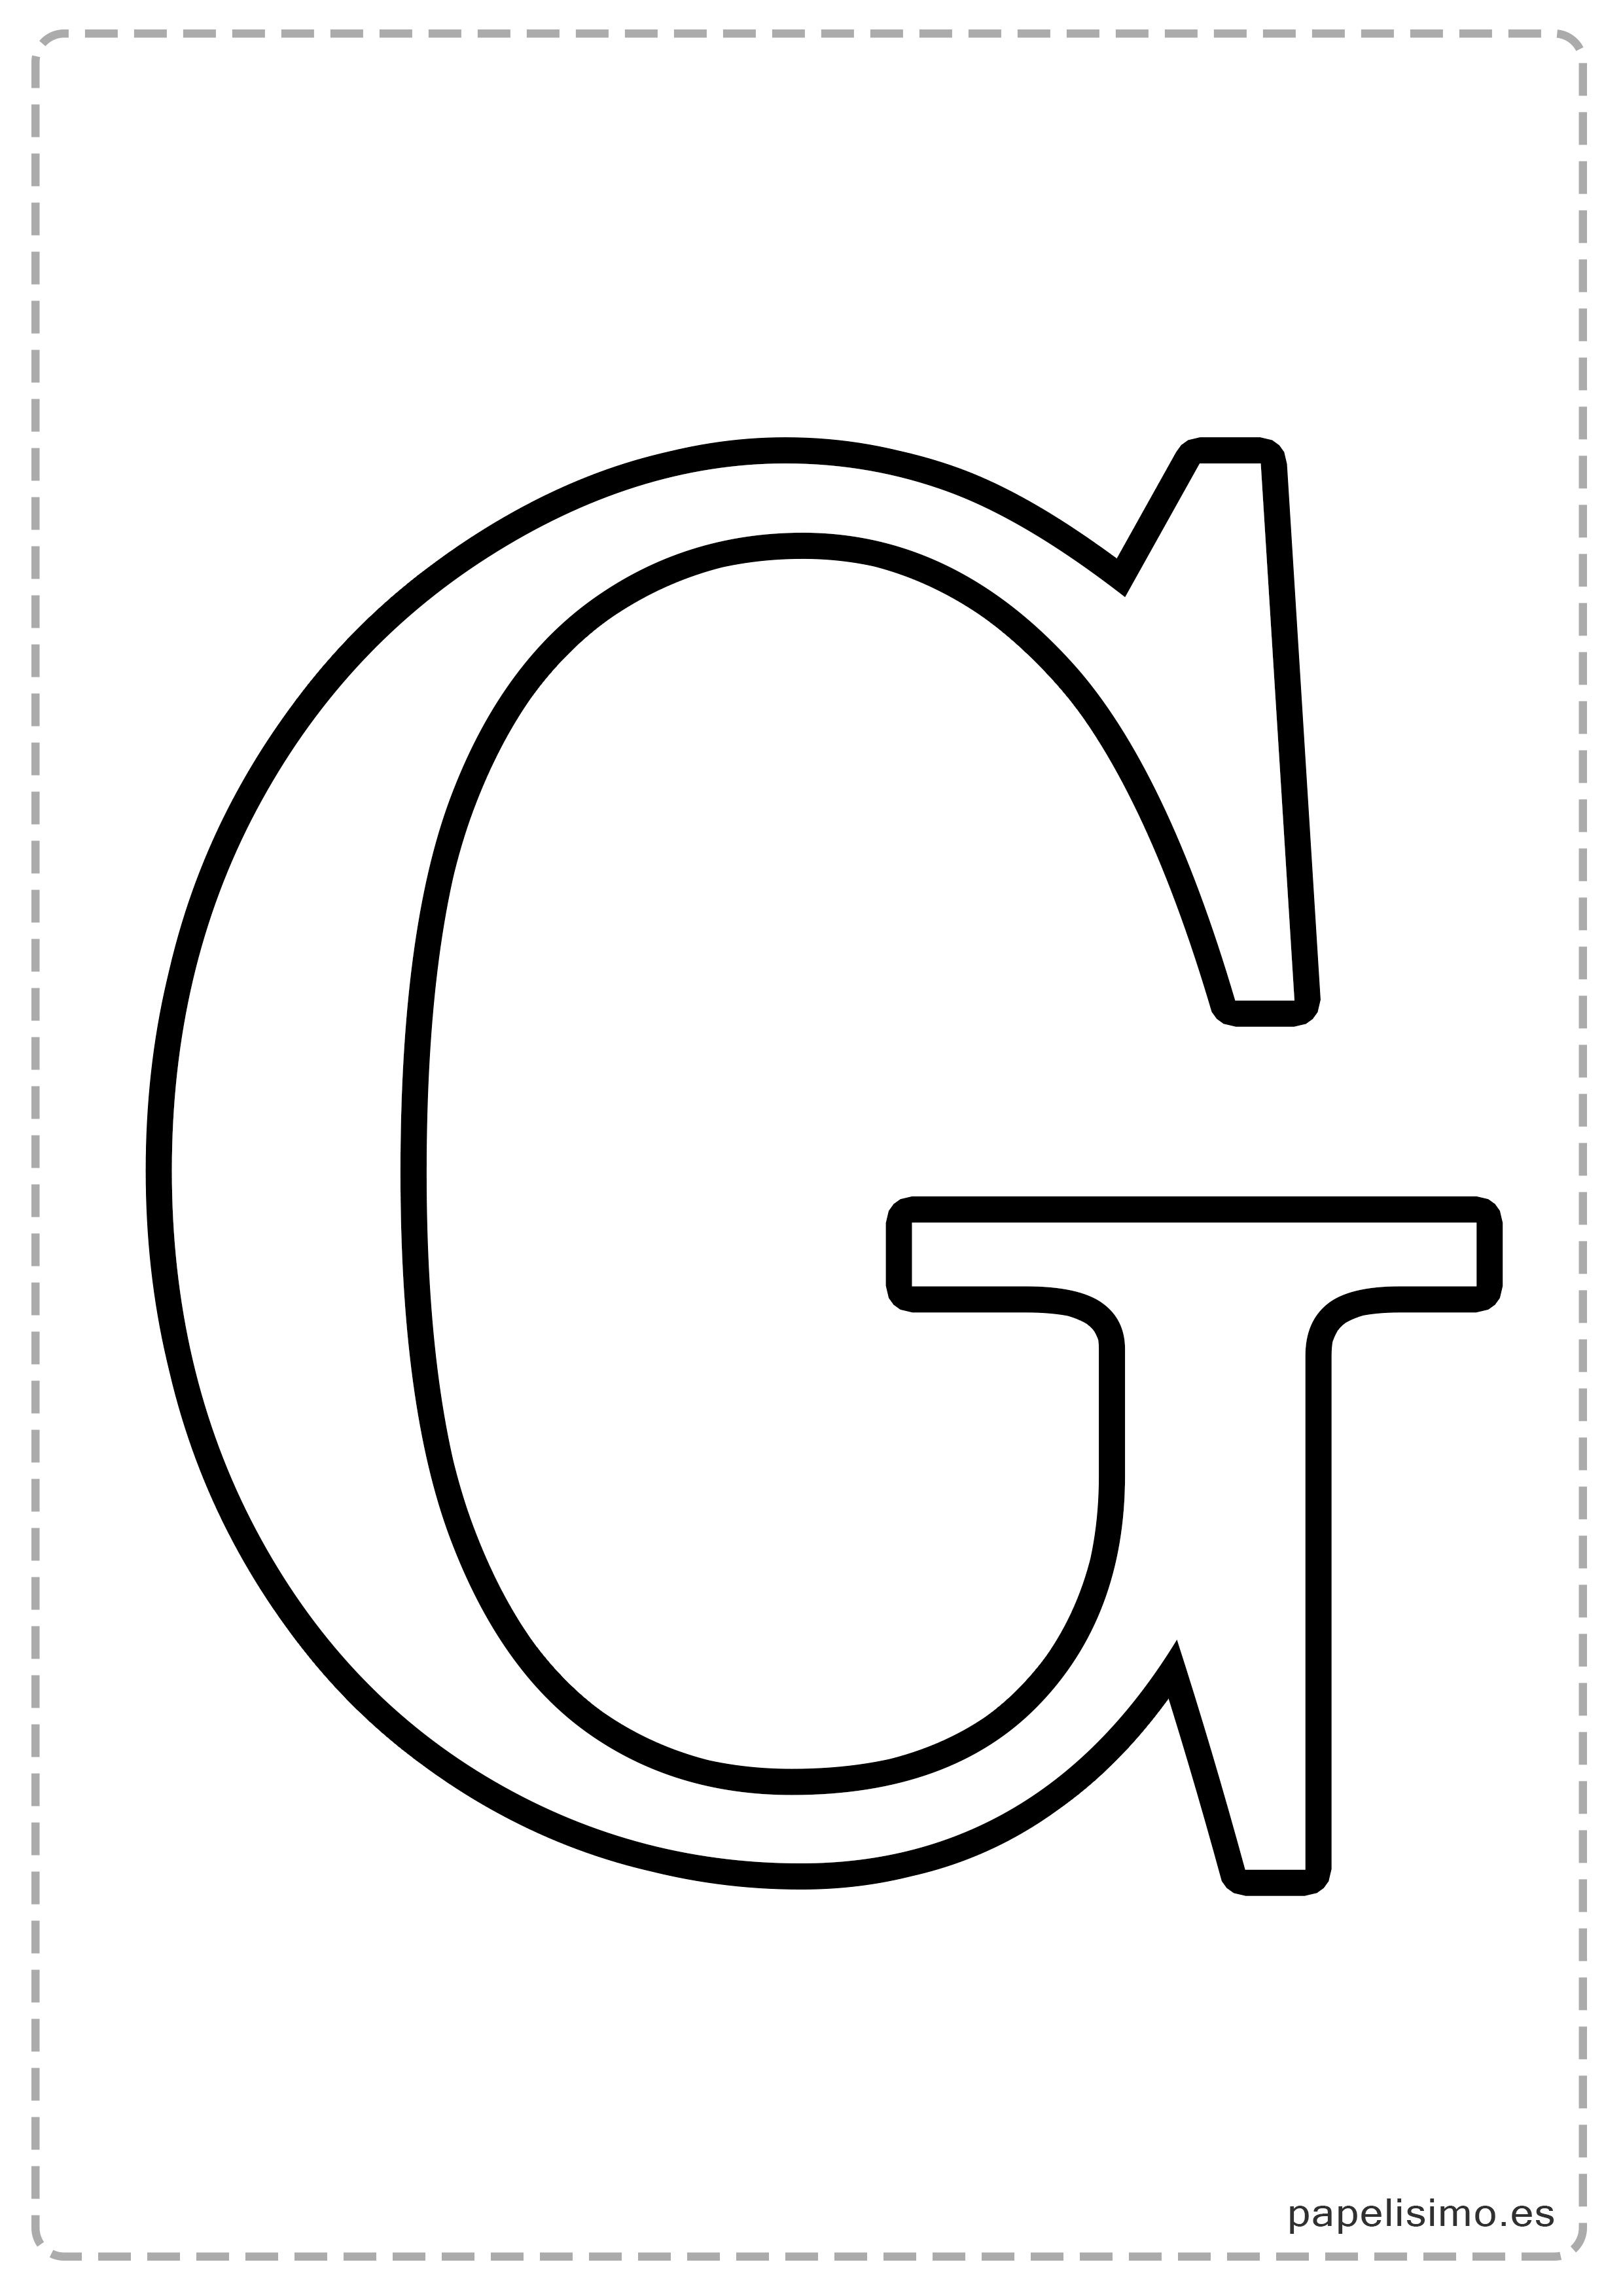 Трафарет буквы g